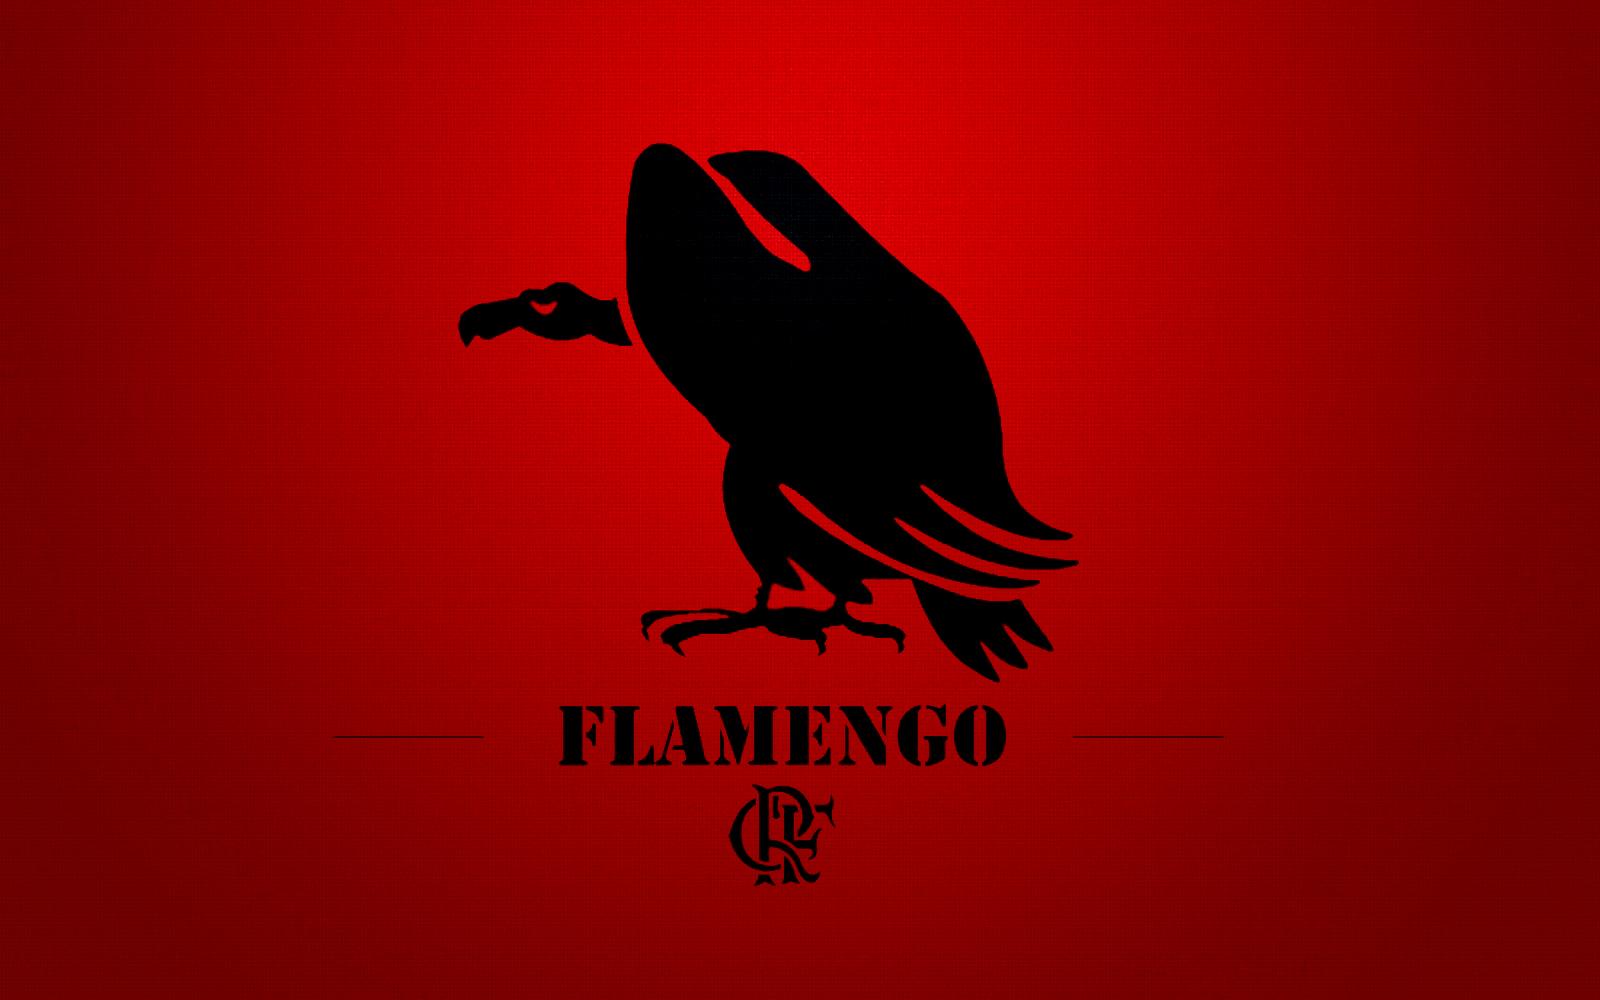 Clube De Regatas Do Flamengo at 640 x 1136 iPhone 5 size wallpapers HD quality